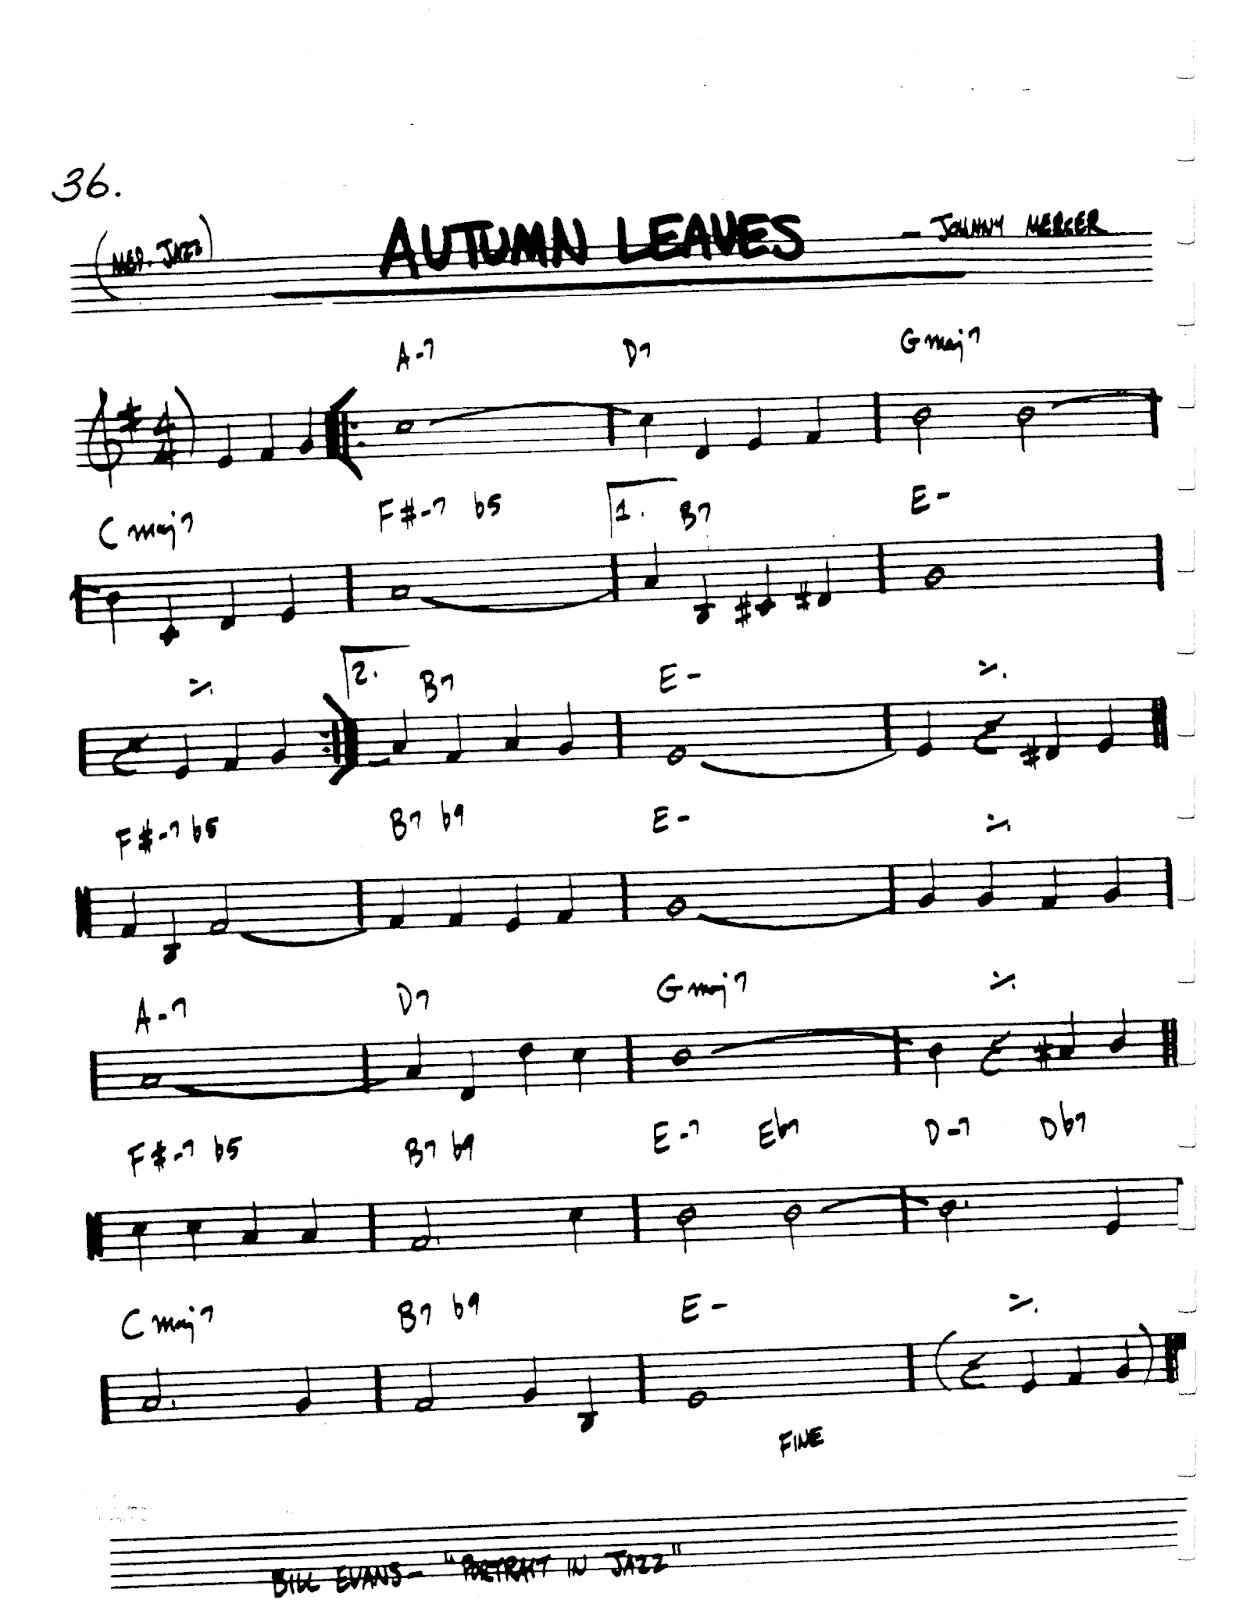 PRACTICE JAZZ: Autumn Leaves In Em key (Medium Swing Tempo 145) - Jazz